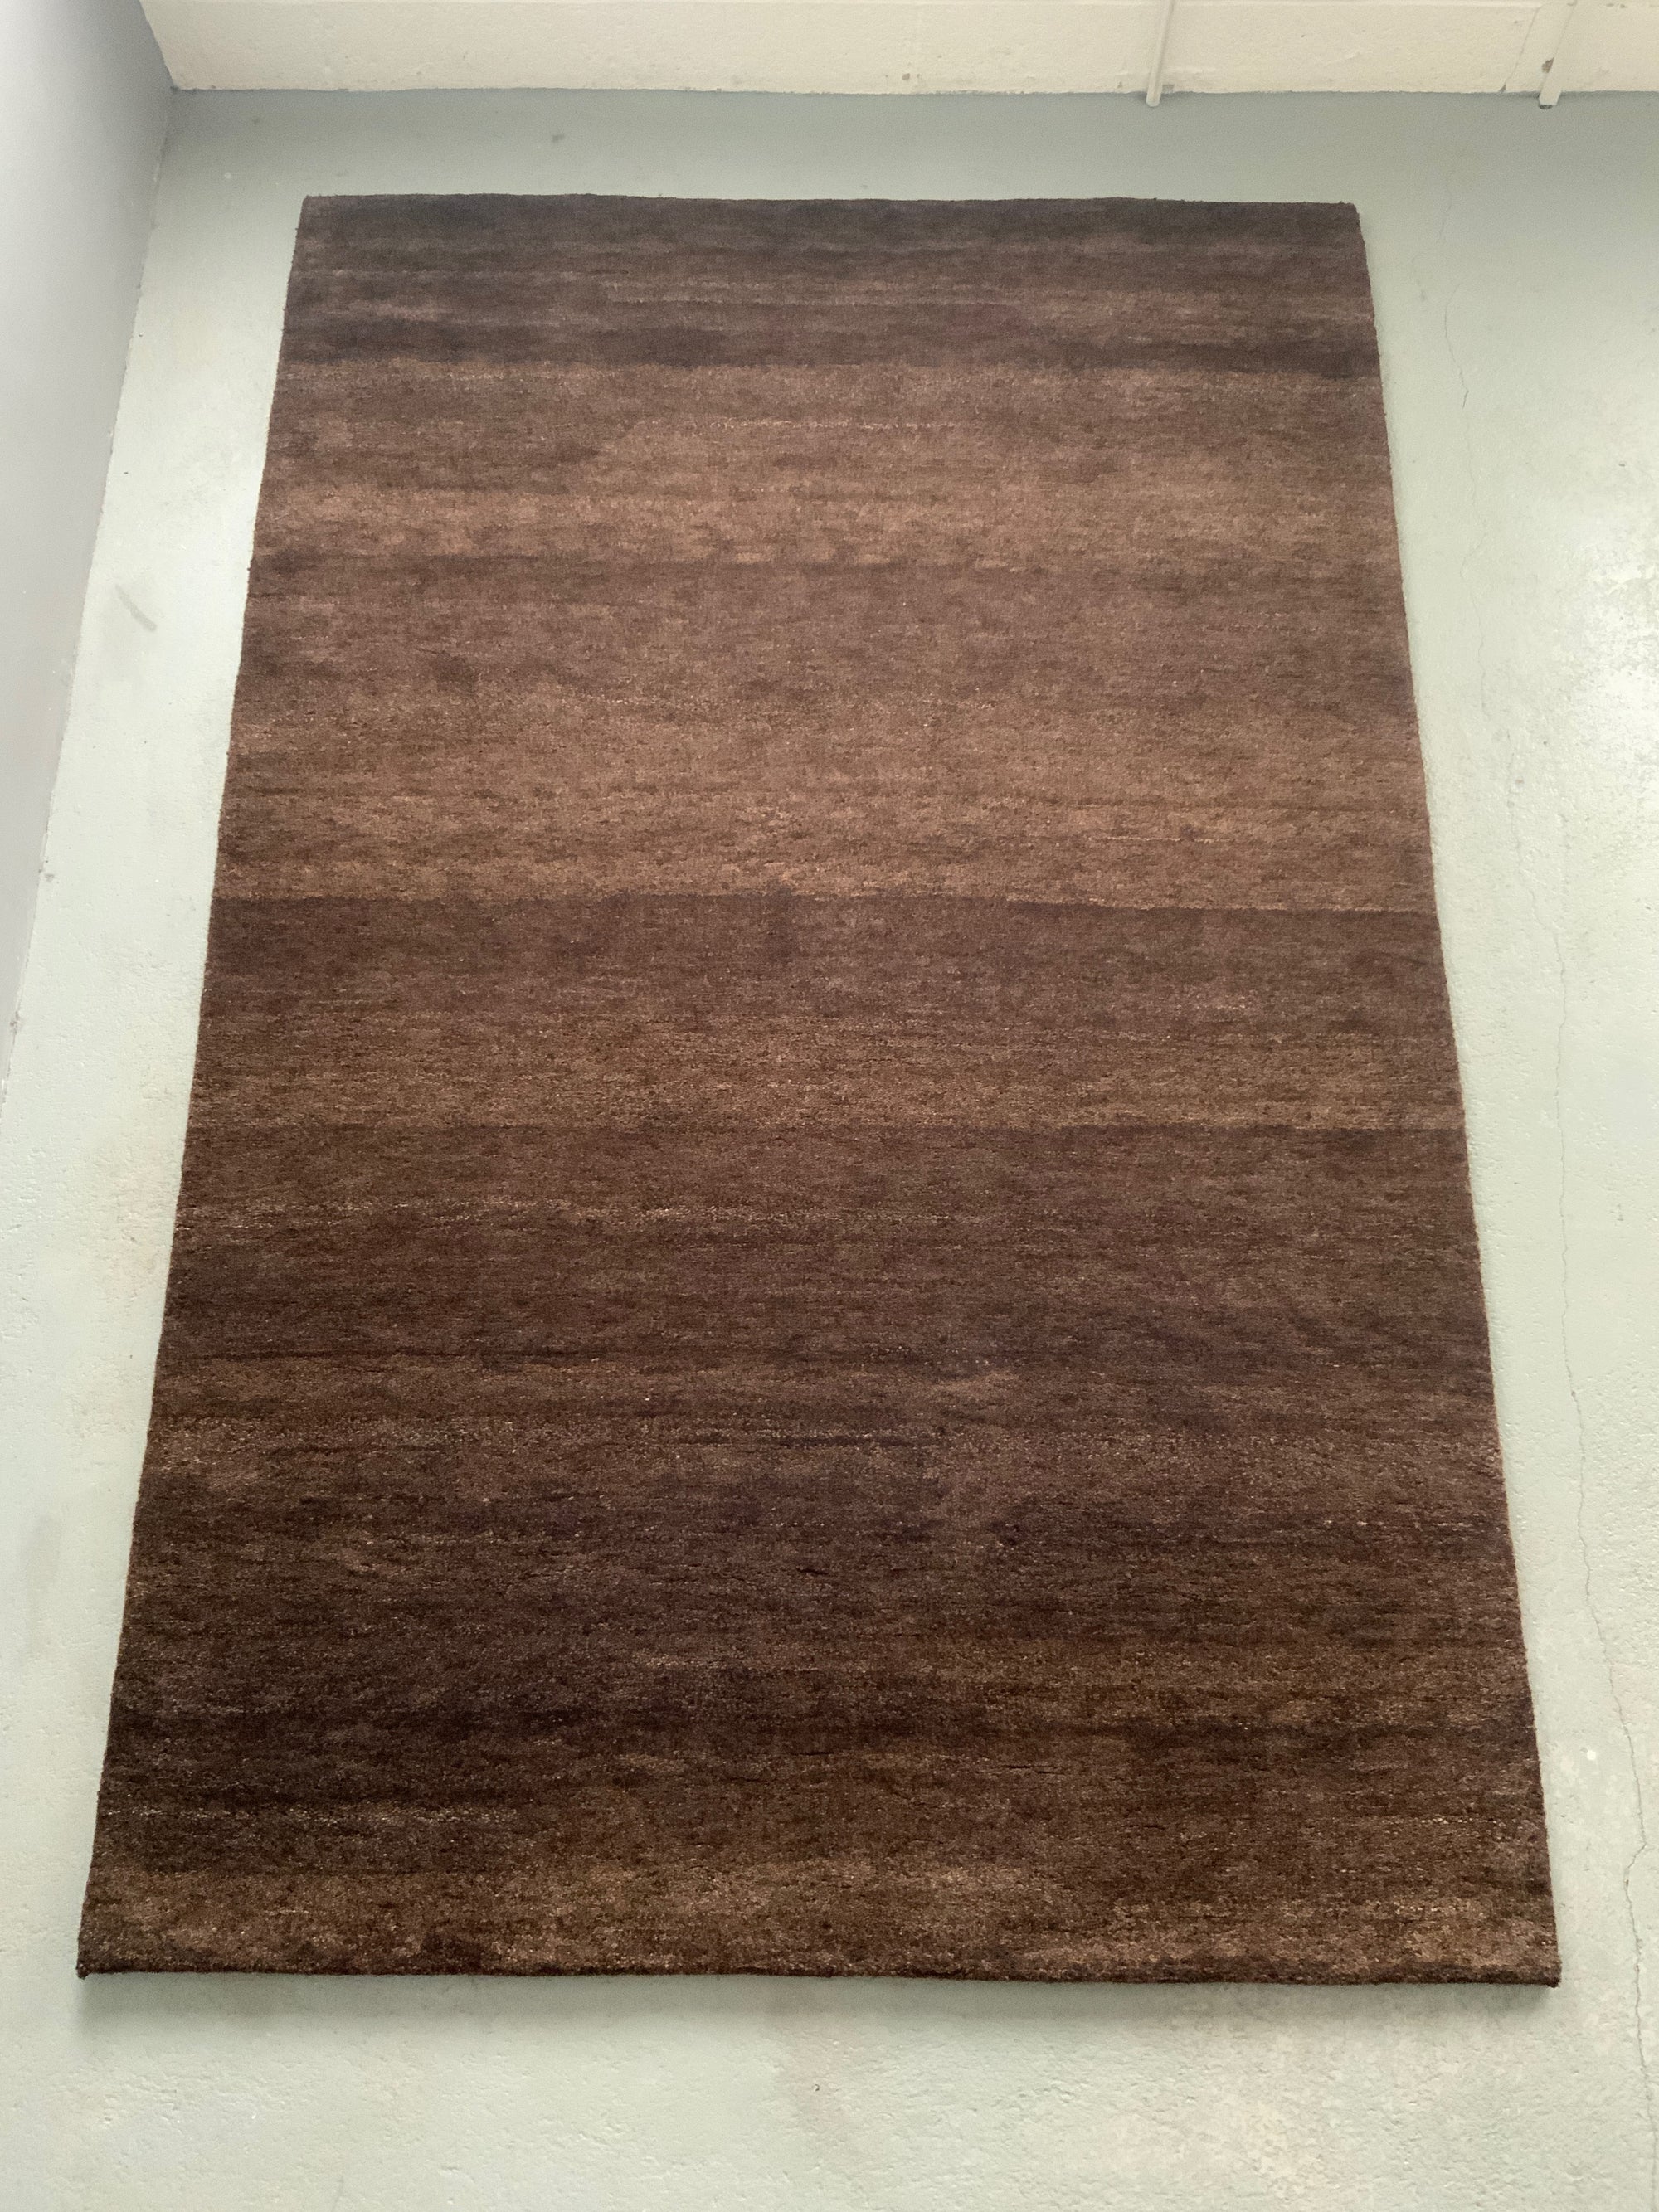 Indian gabbeh plain mottled tan rug (239 x 155cm)